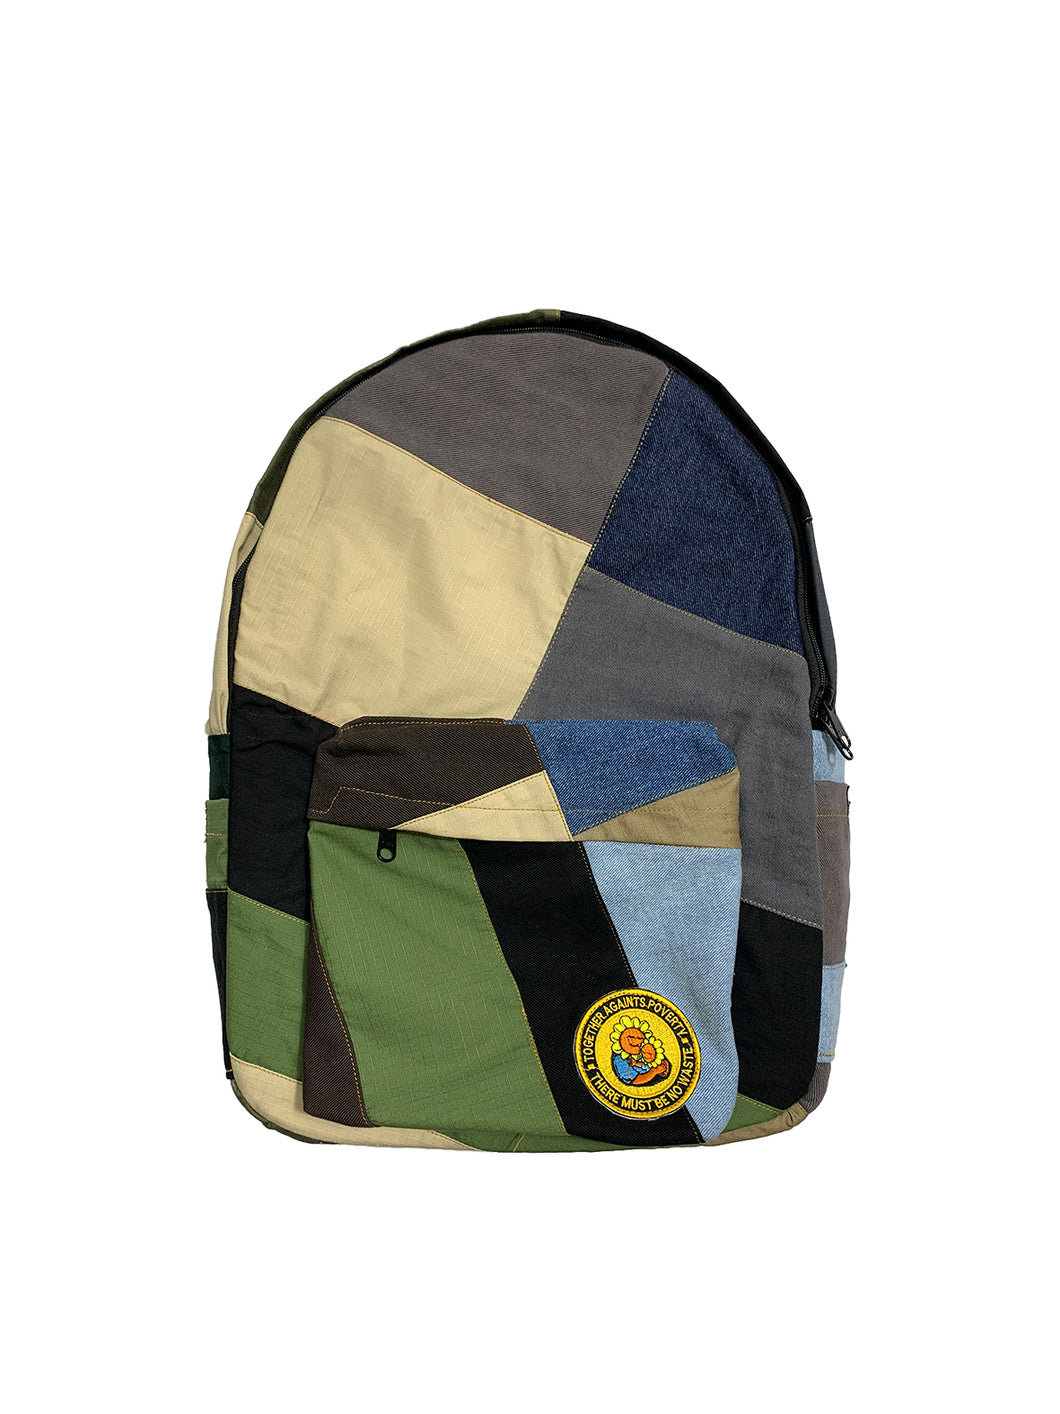 #theremustbenowaste - Backpack (1/1) - TAP Type 025